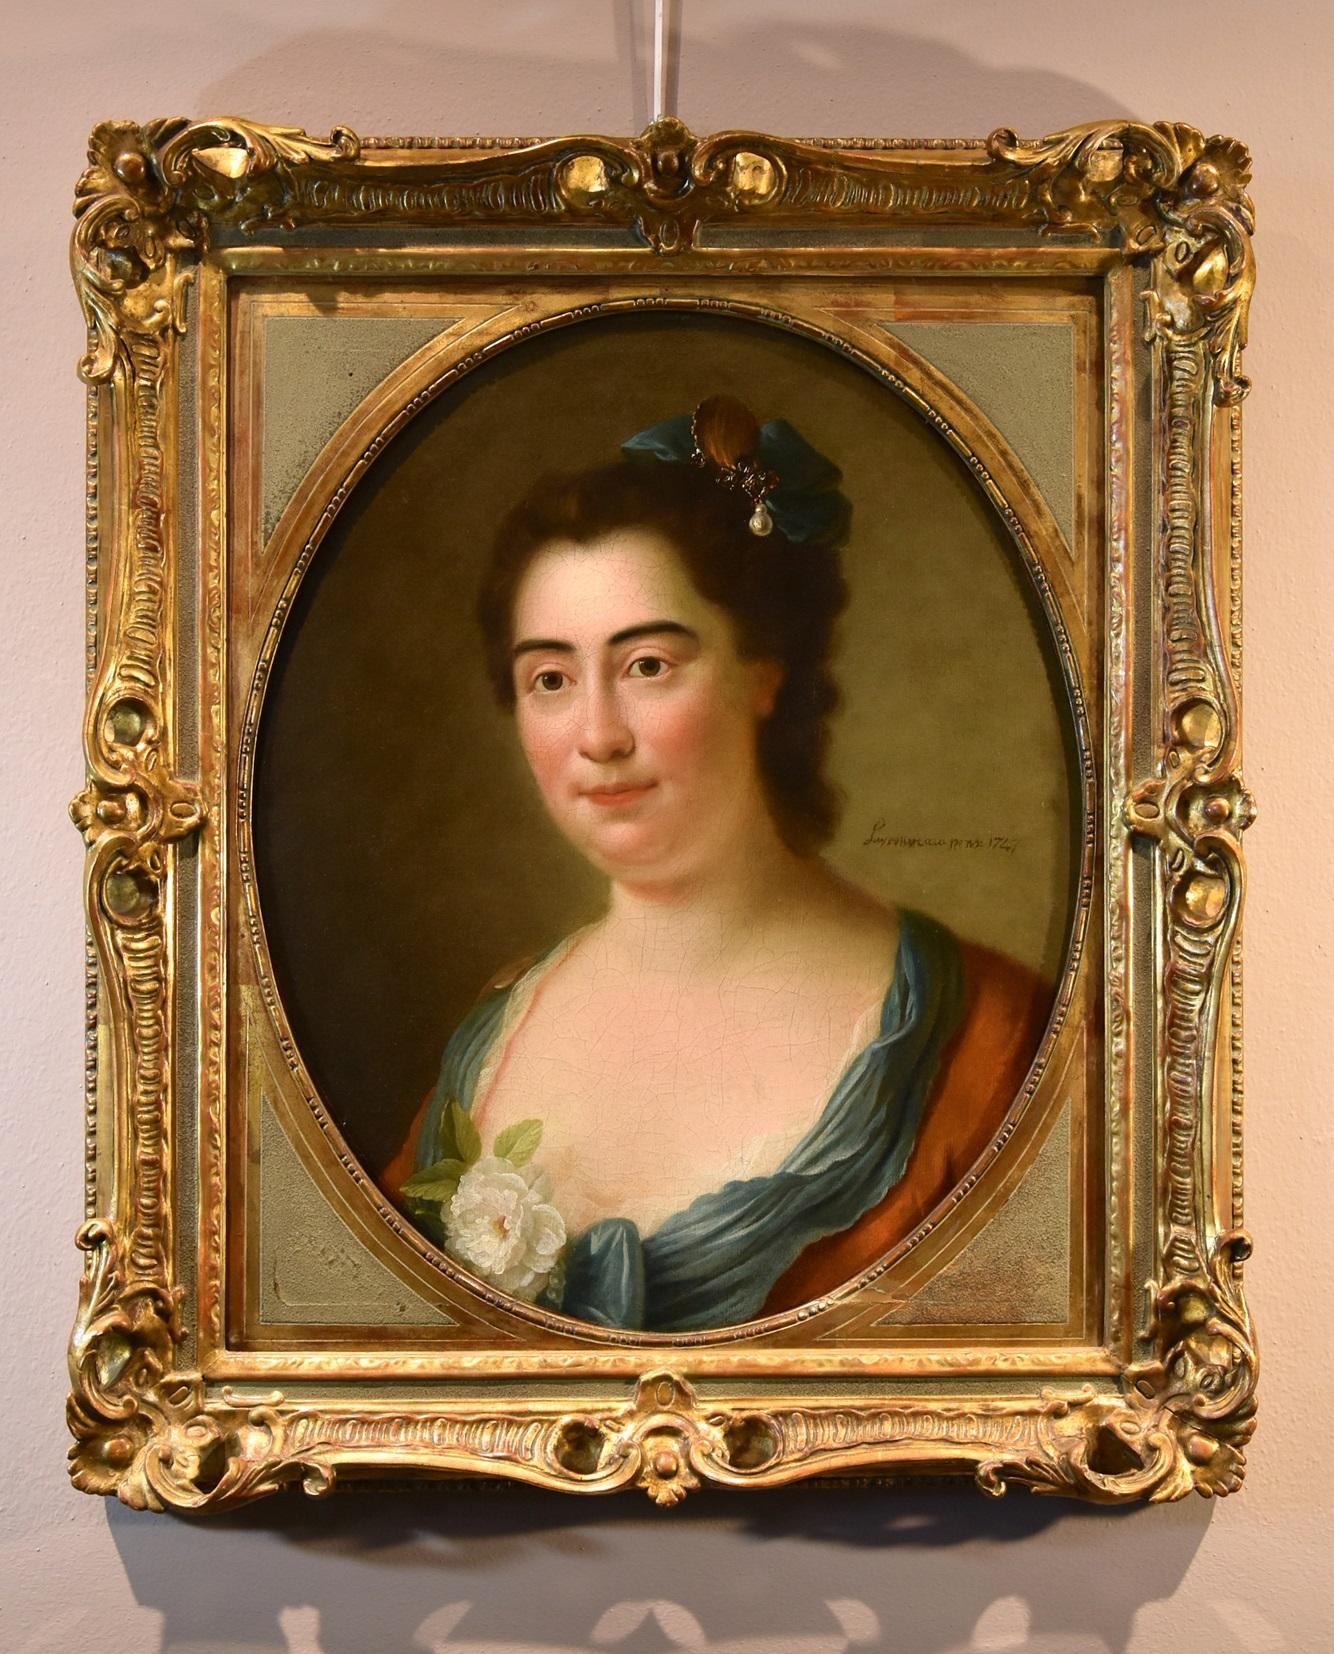 Jean-baptiste Perroneau (paris, 1715 – Amsterdam, 1783) Portrait Painting - Perroneau Portrait Lady Woman Paint Oil on canvas 18th Century Old master French